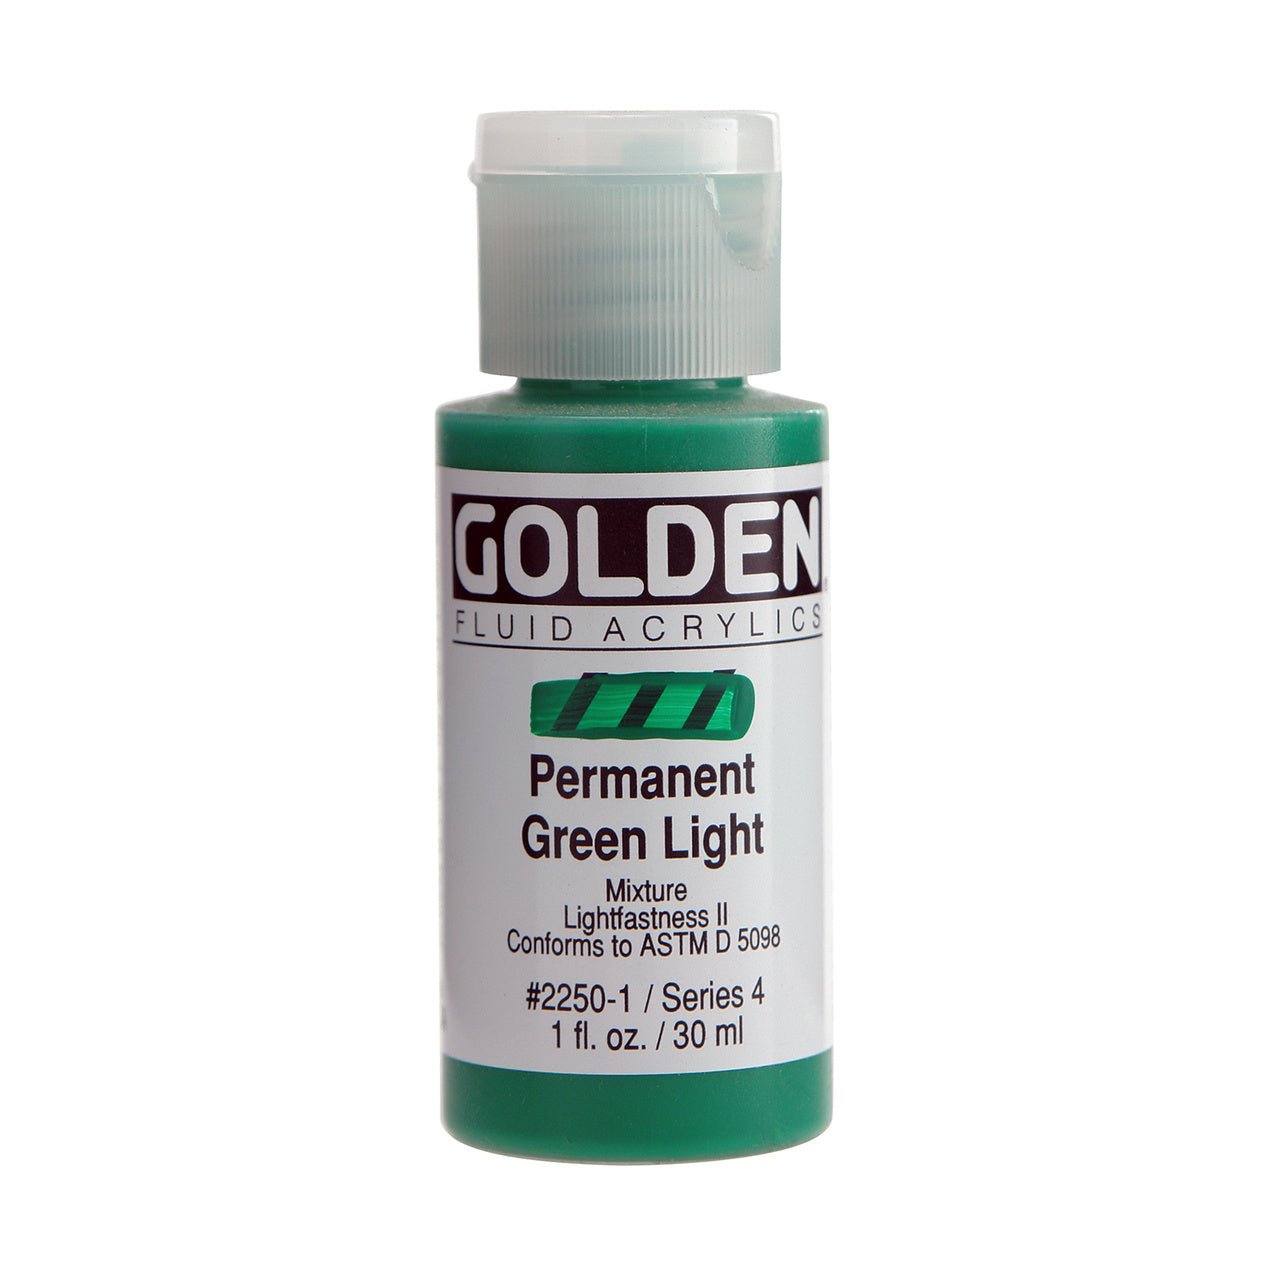 Golden Fluid Acrylic Permanent Green Light 1 oz - merriartist.com